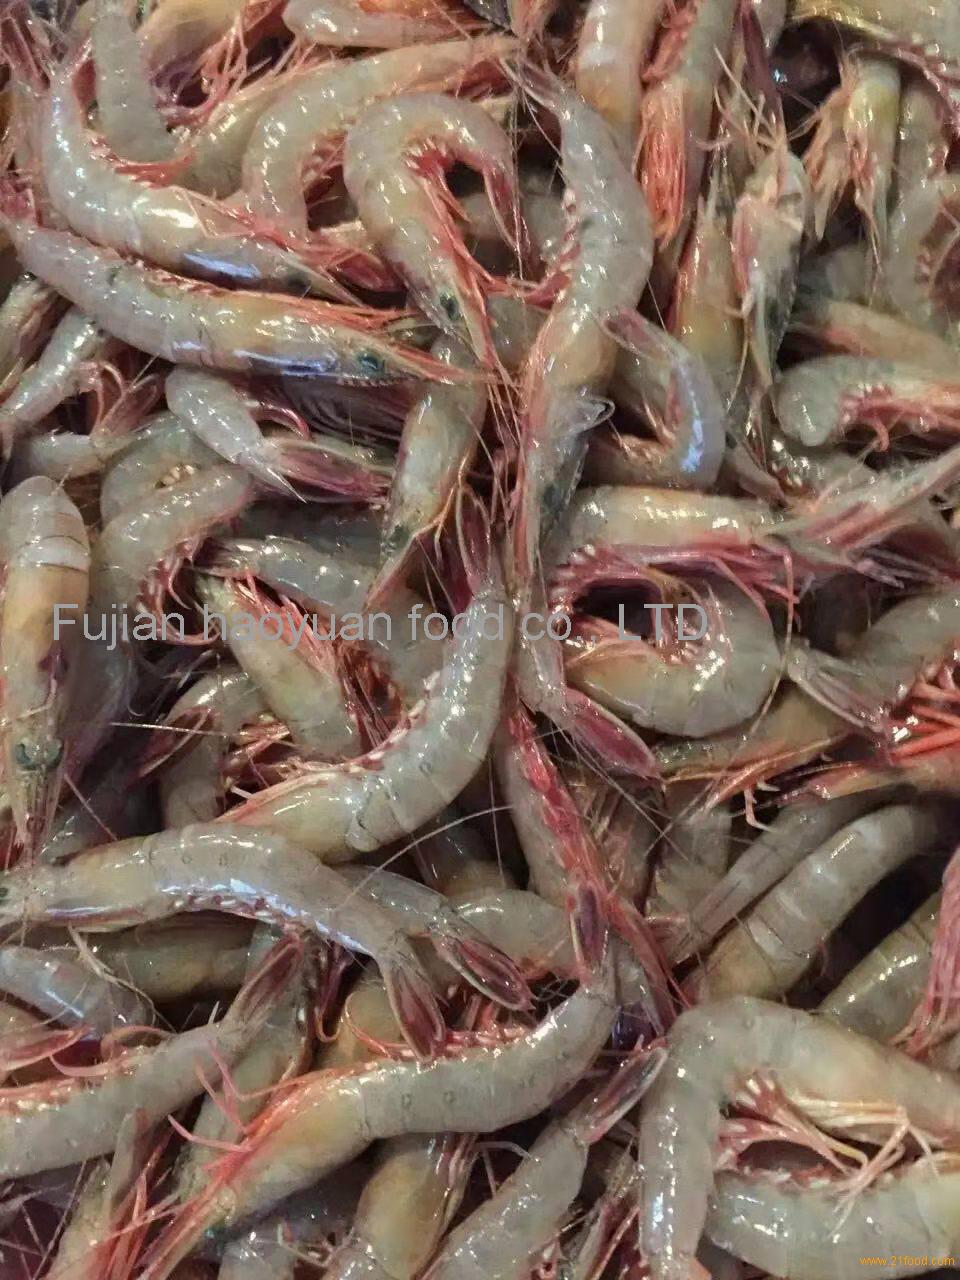 AD shrimp